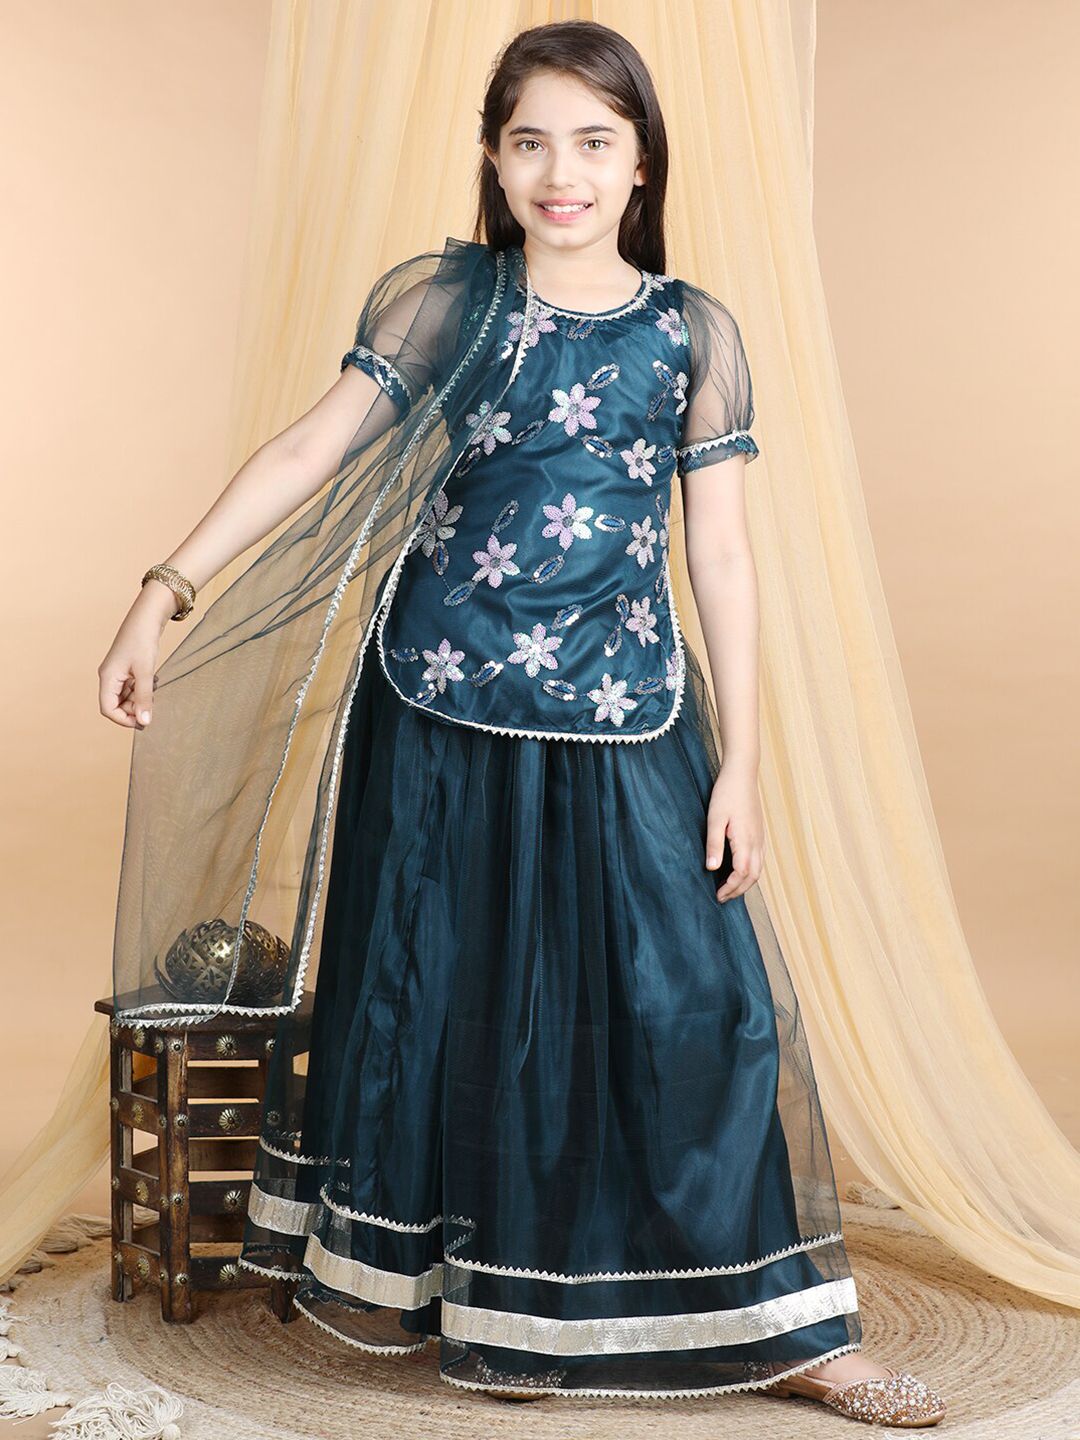 Cutiekins Girls Sequinned Embroidered Ready To Wear Lehenga Choli & Dupatta Price in India